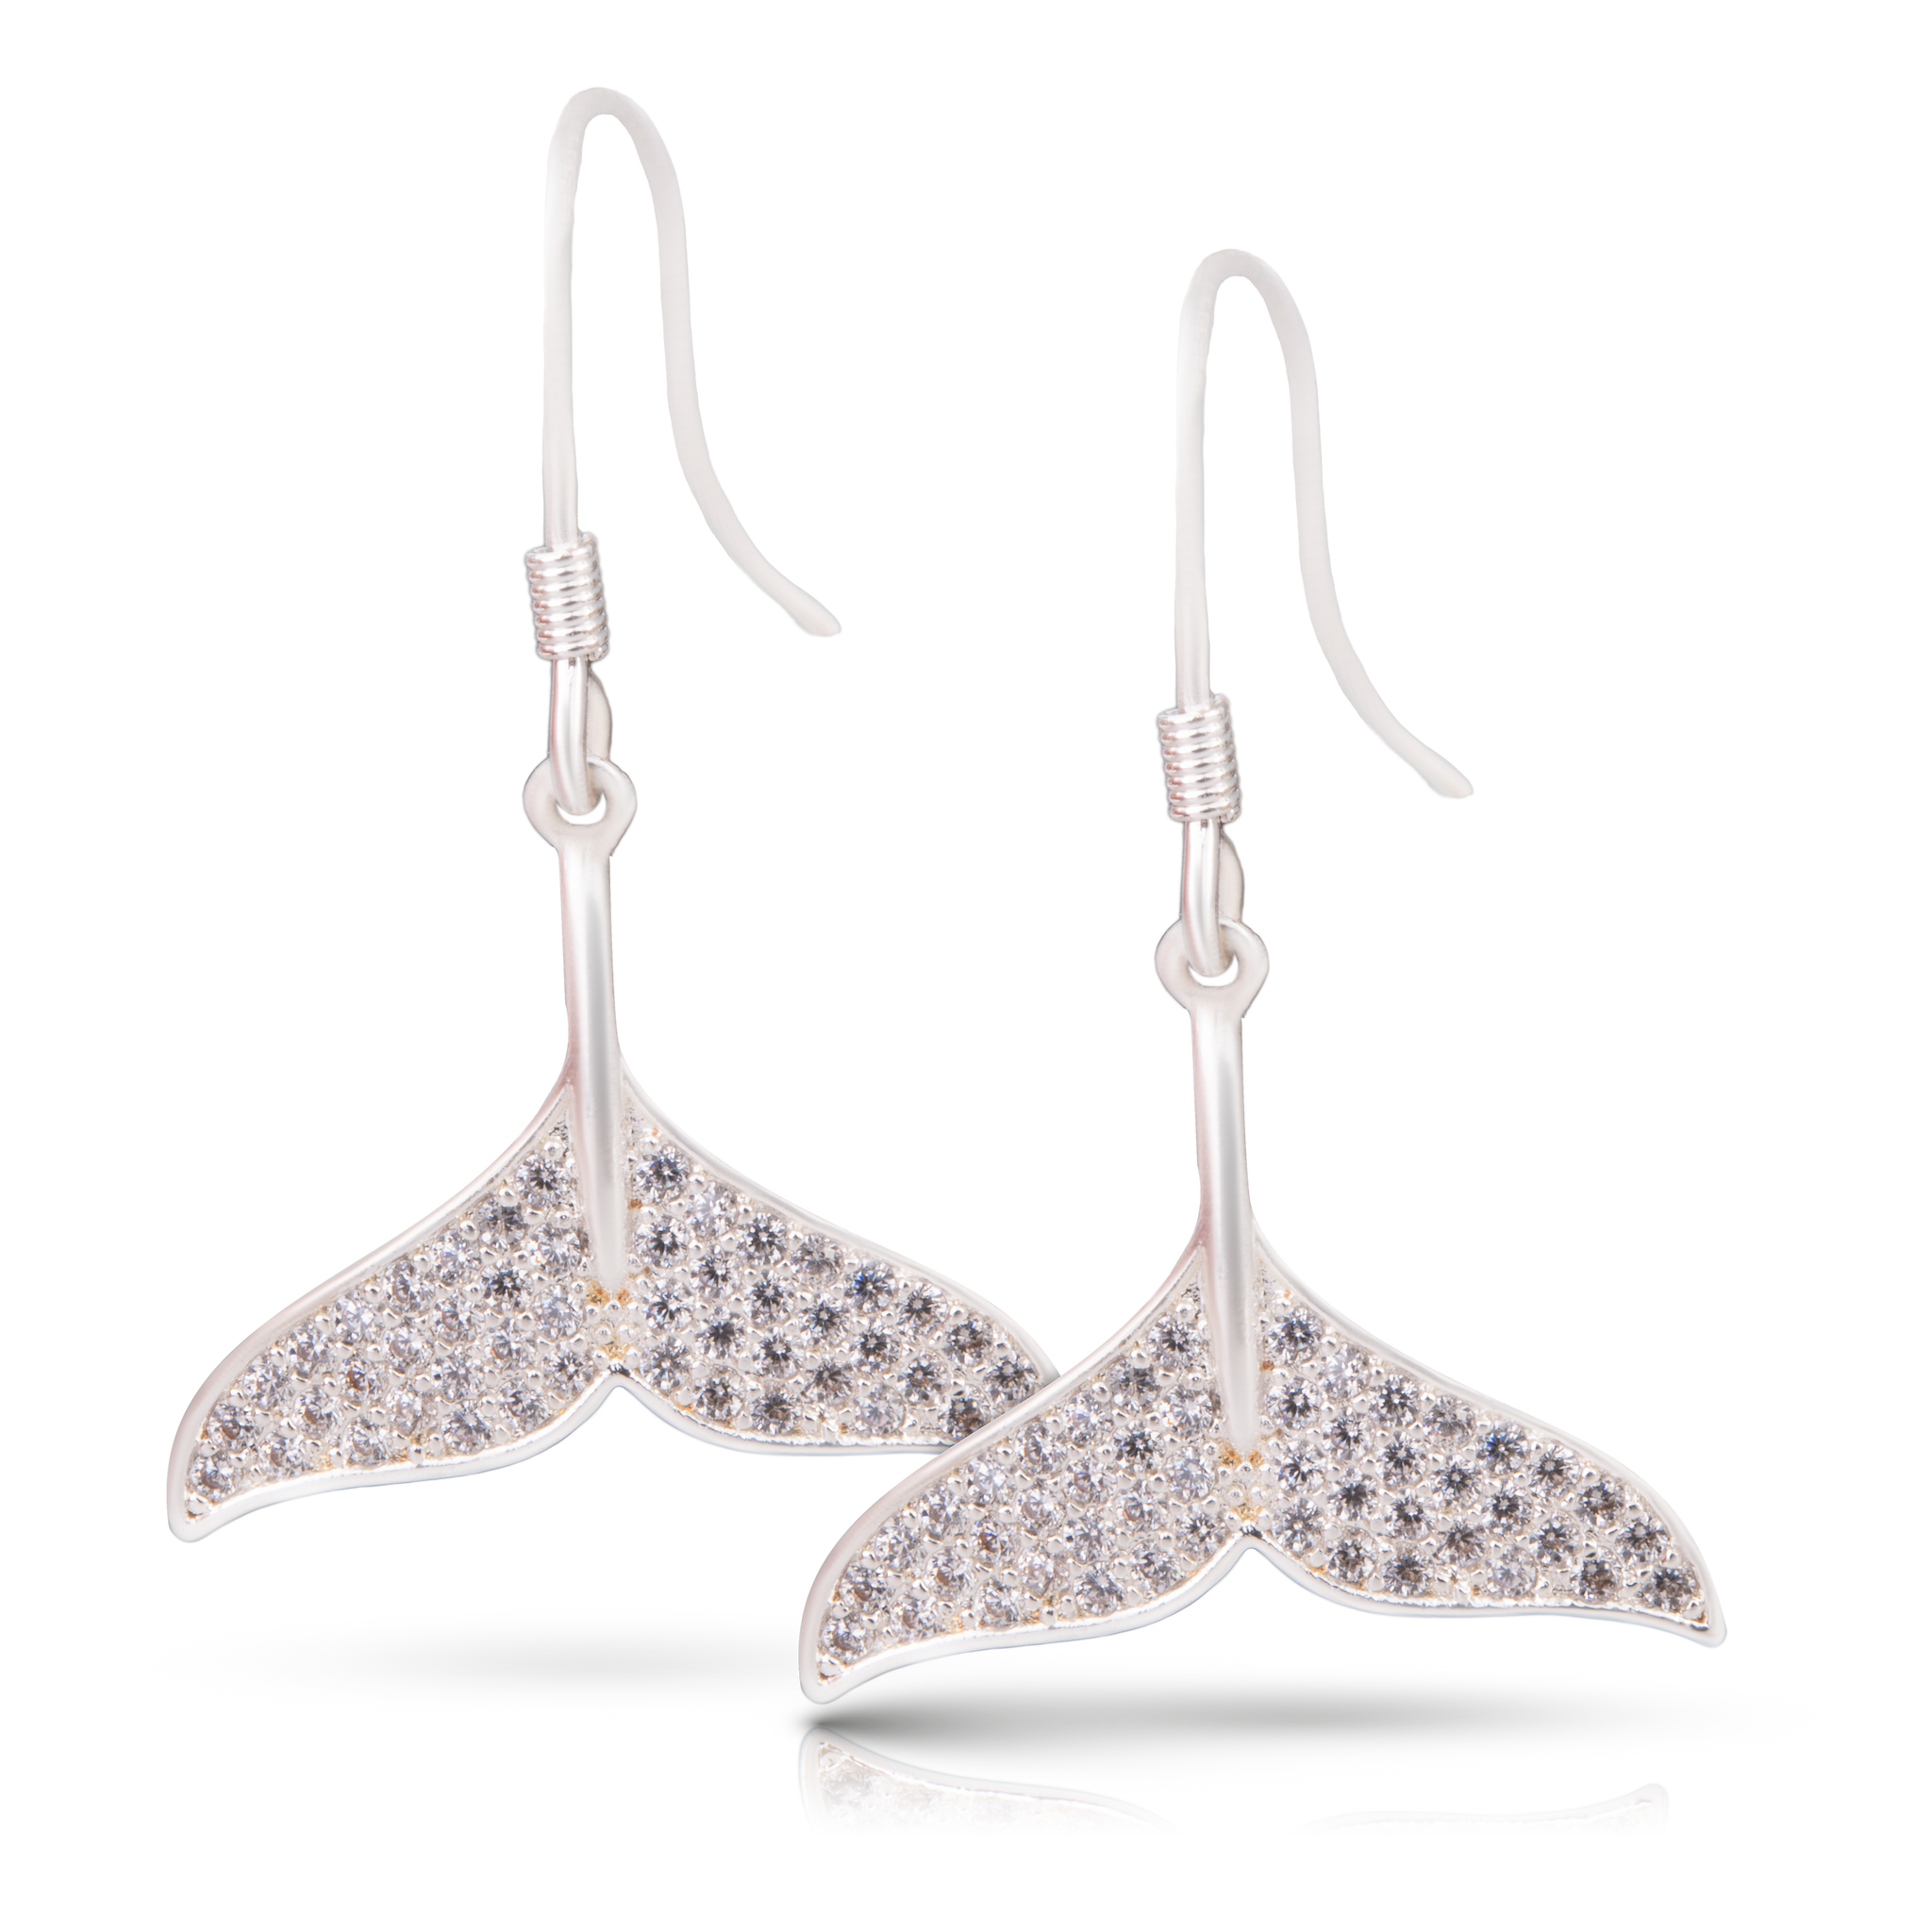 Ice Blu Silver Whale Tail Earrings - Silver